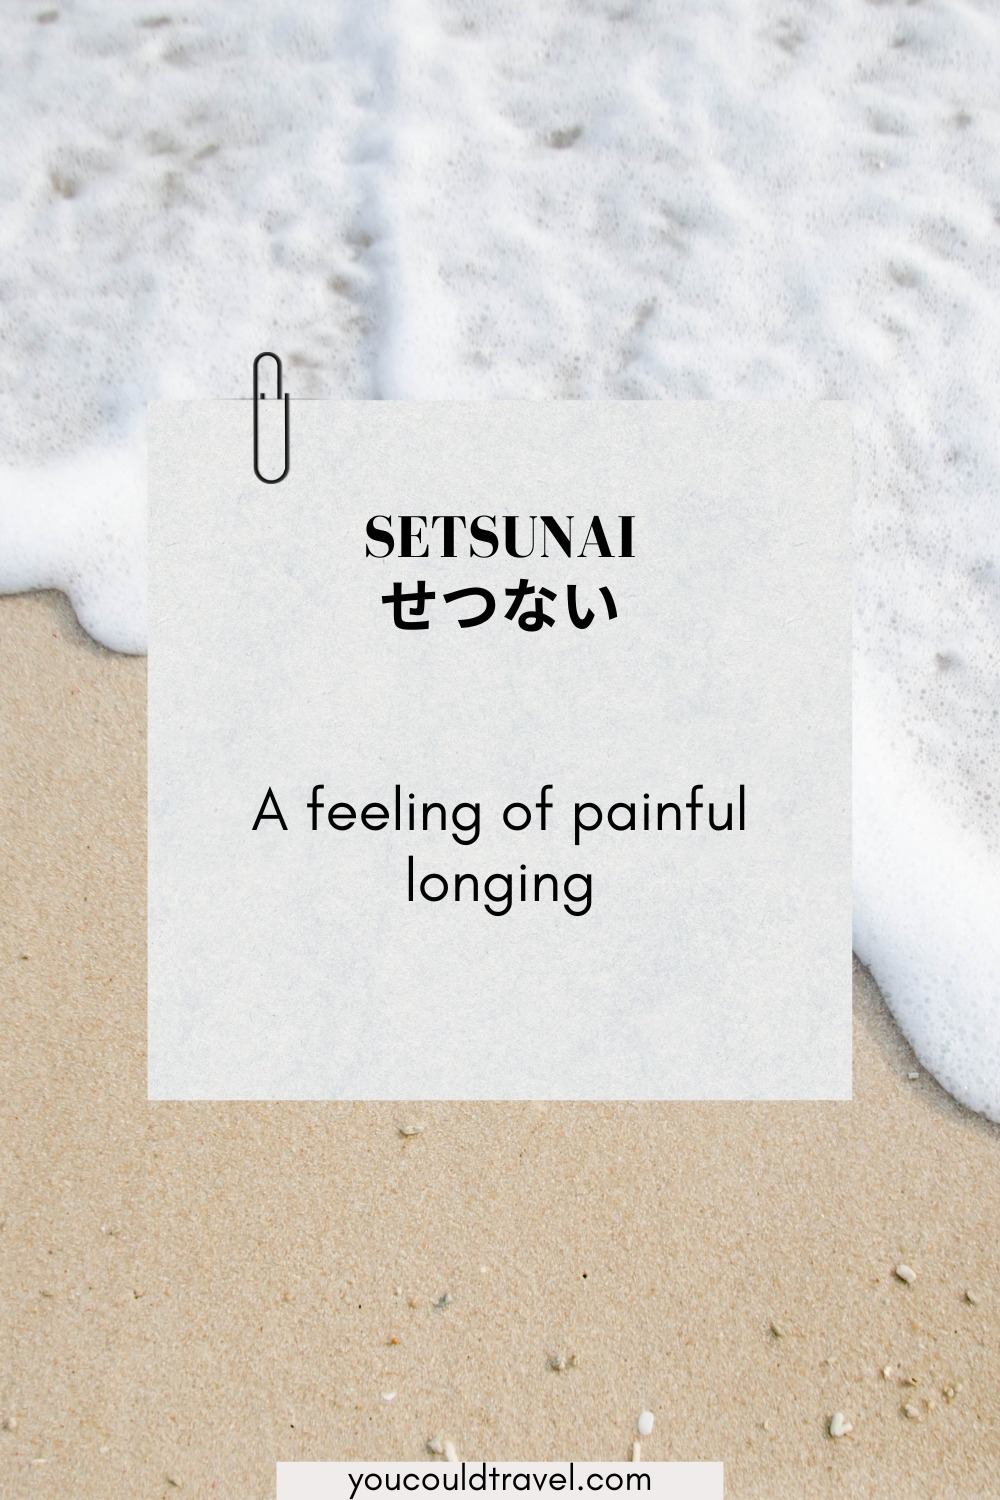 Setsunai - a feeling of longing